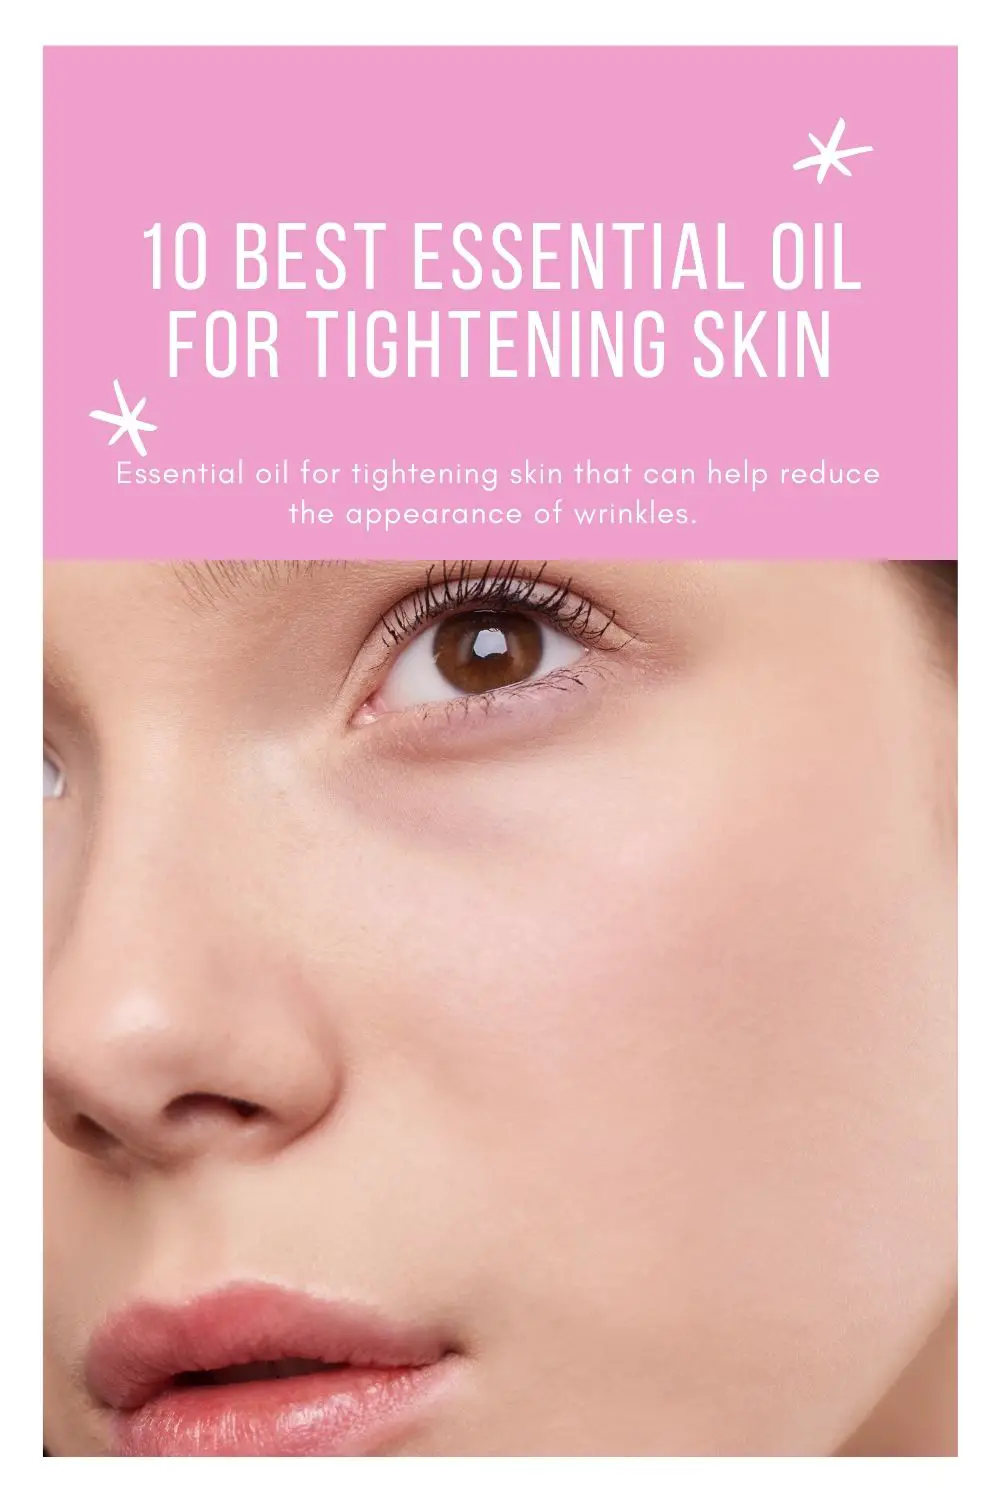 10-best-essential-oil-for-tightening-skin-3090727